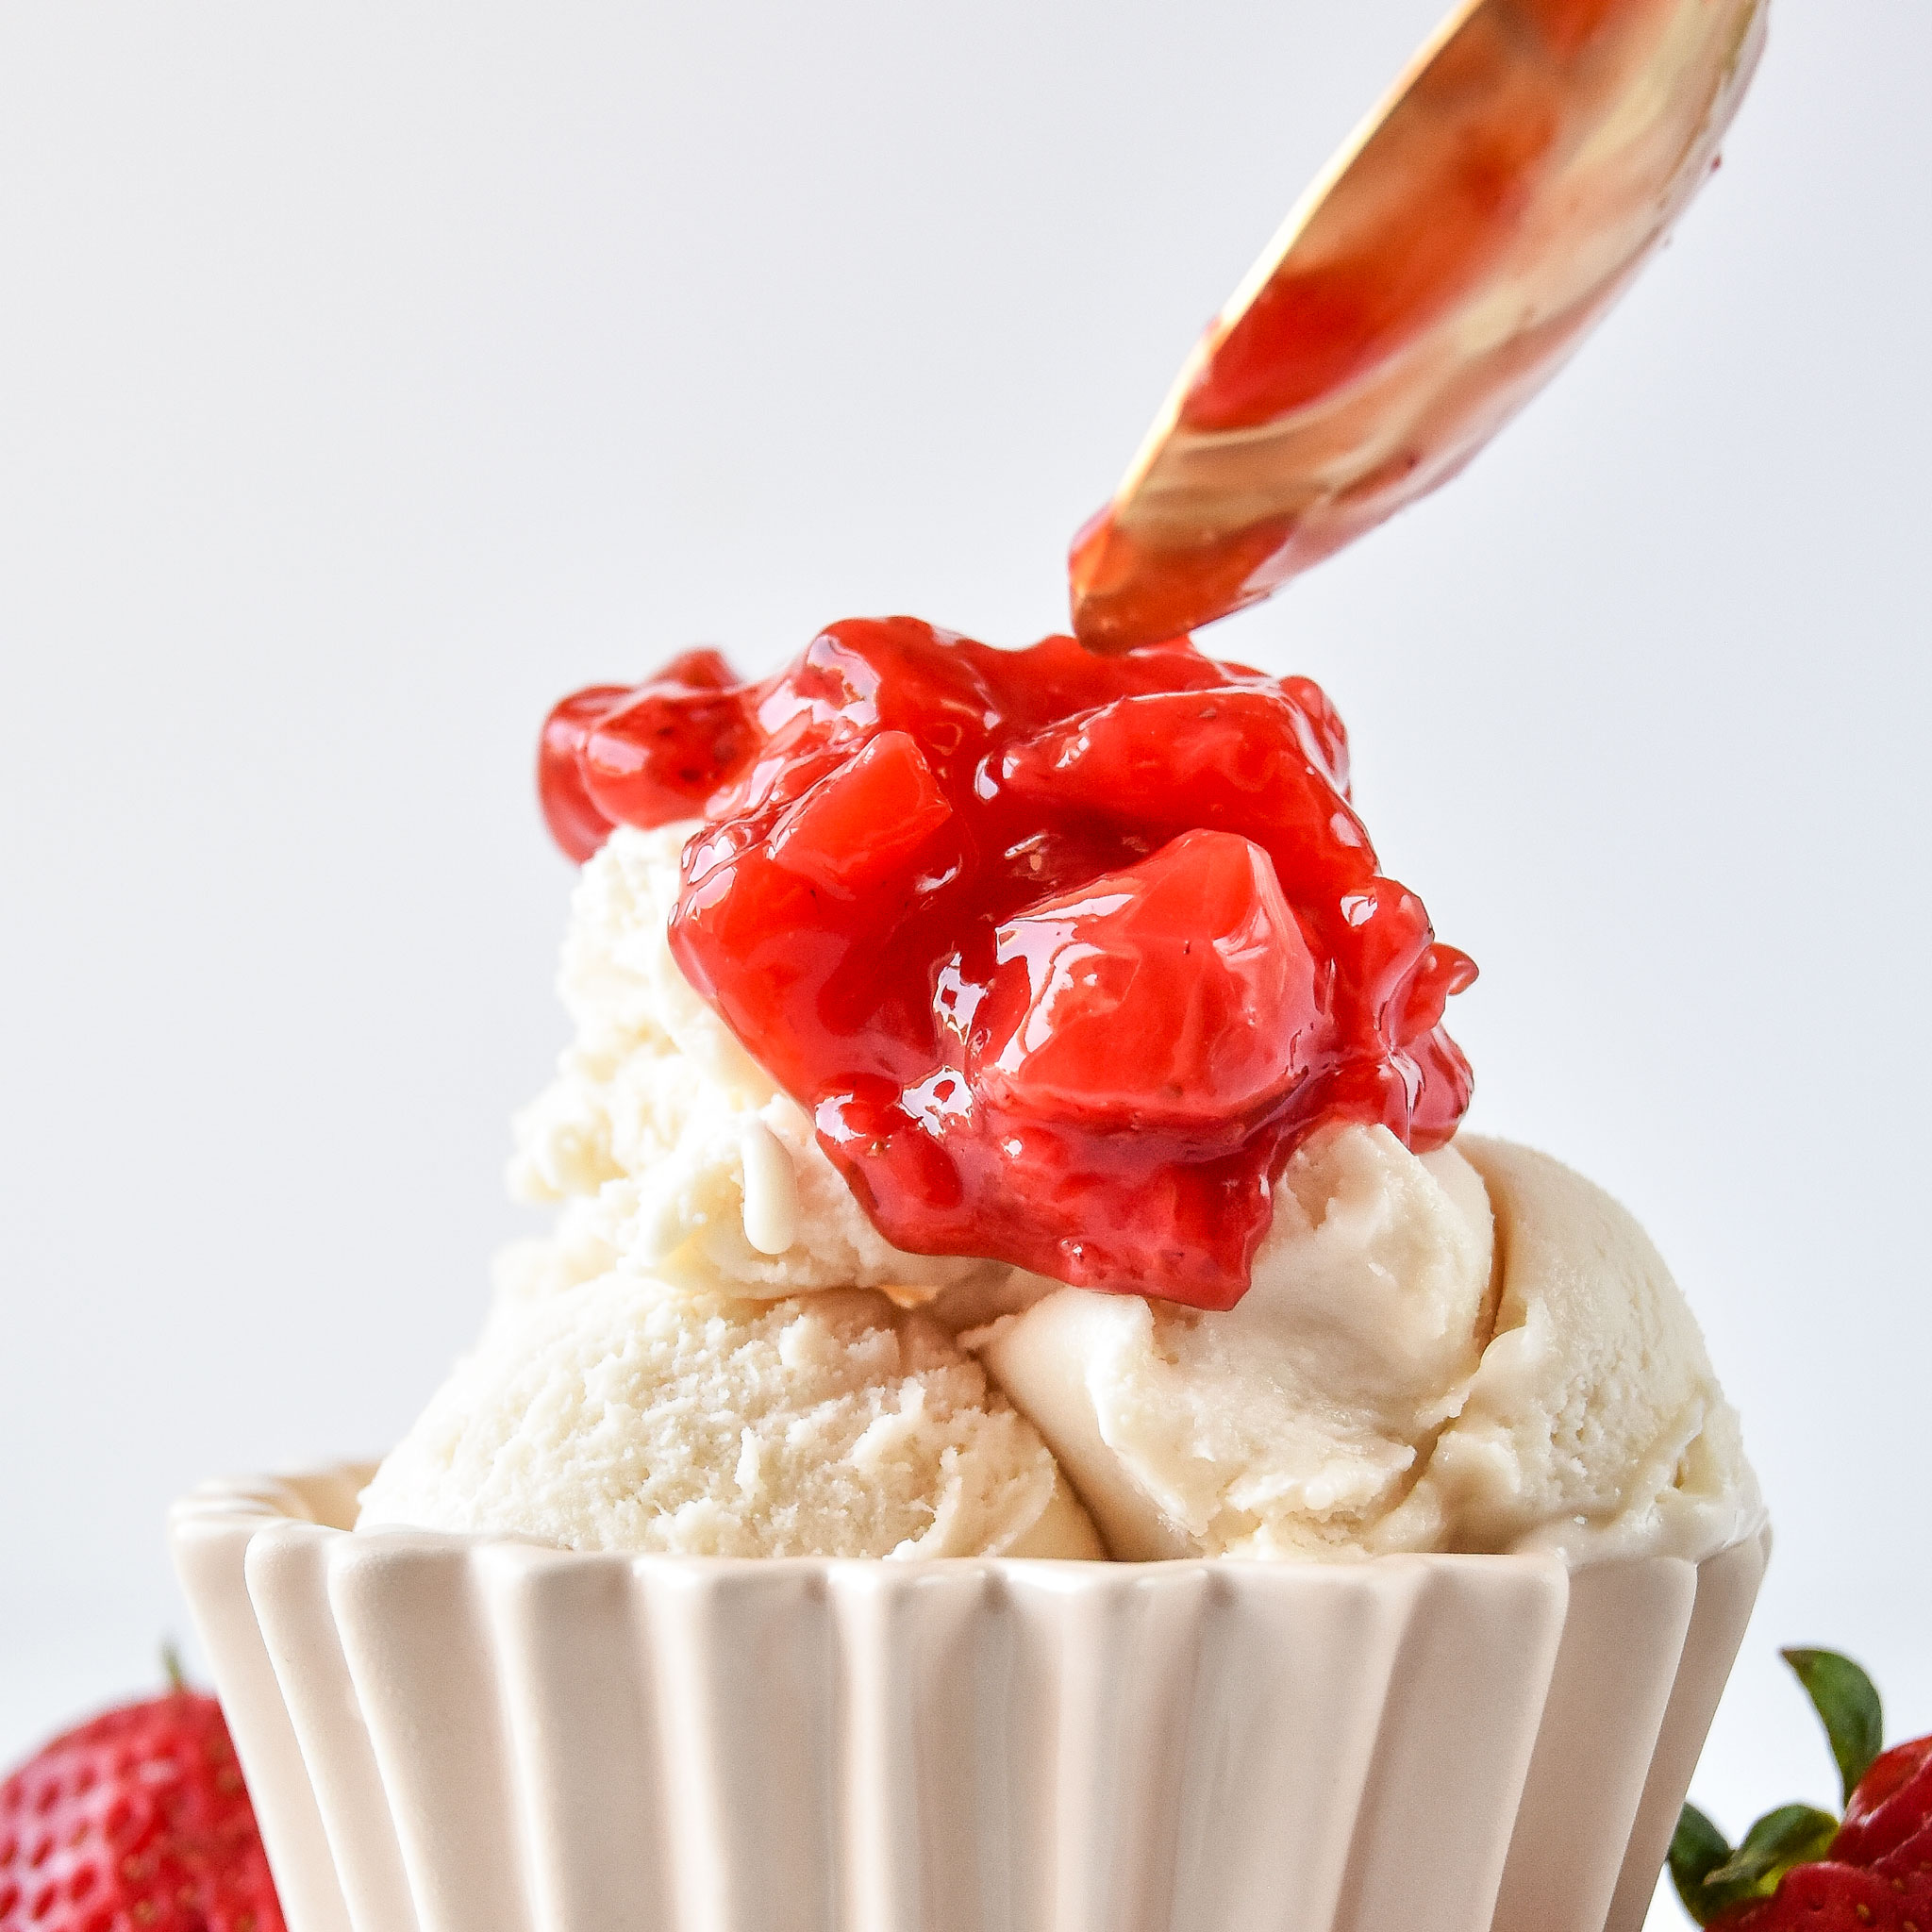 Spooning some easy strawberry sauce on ice cream